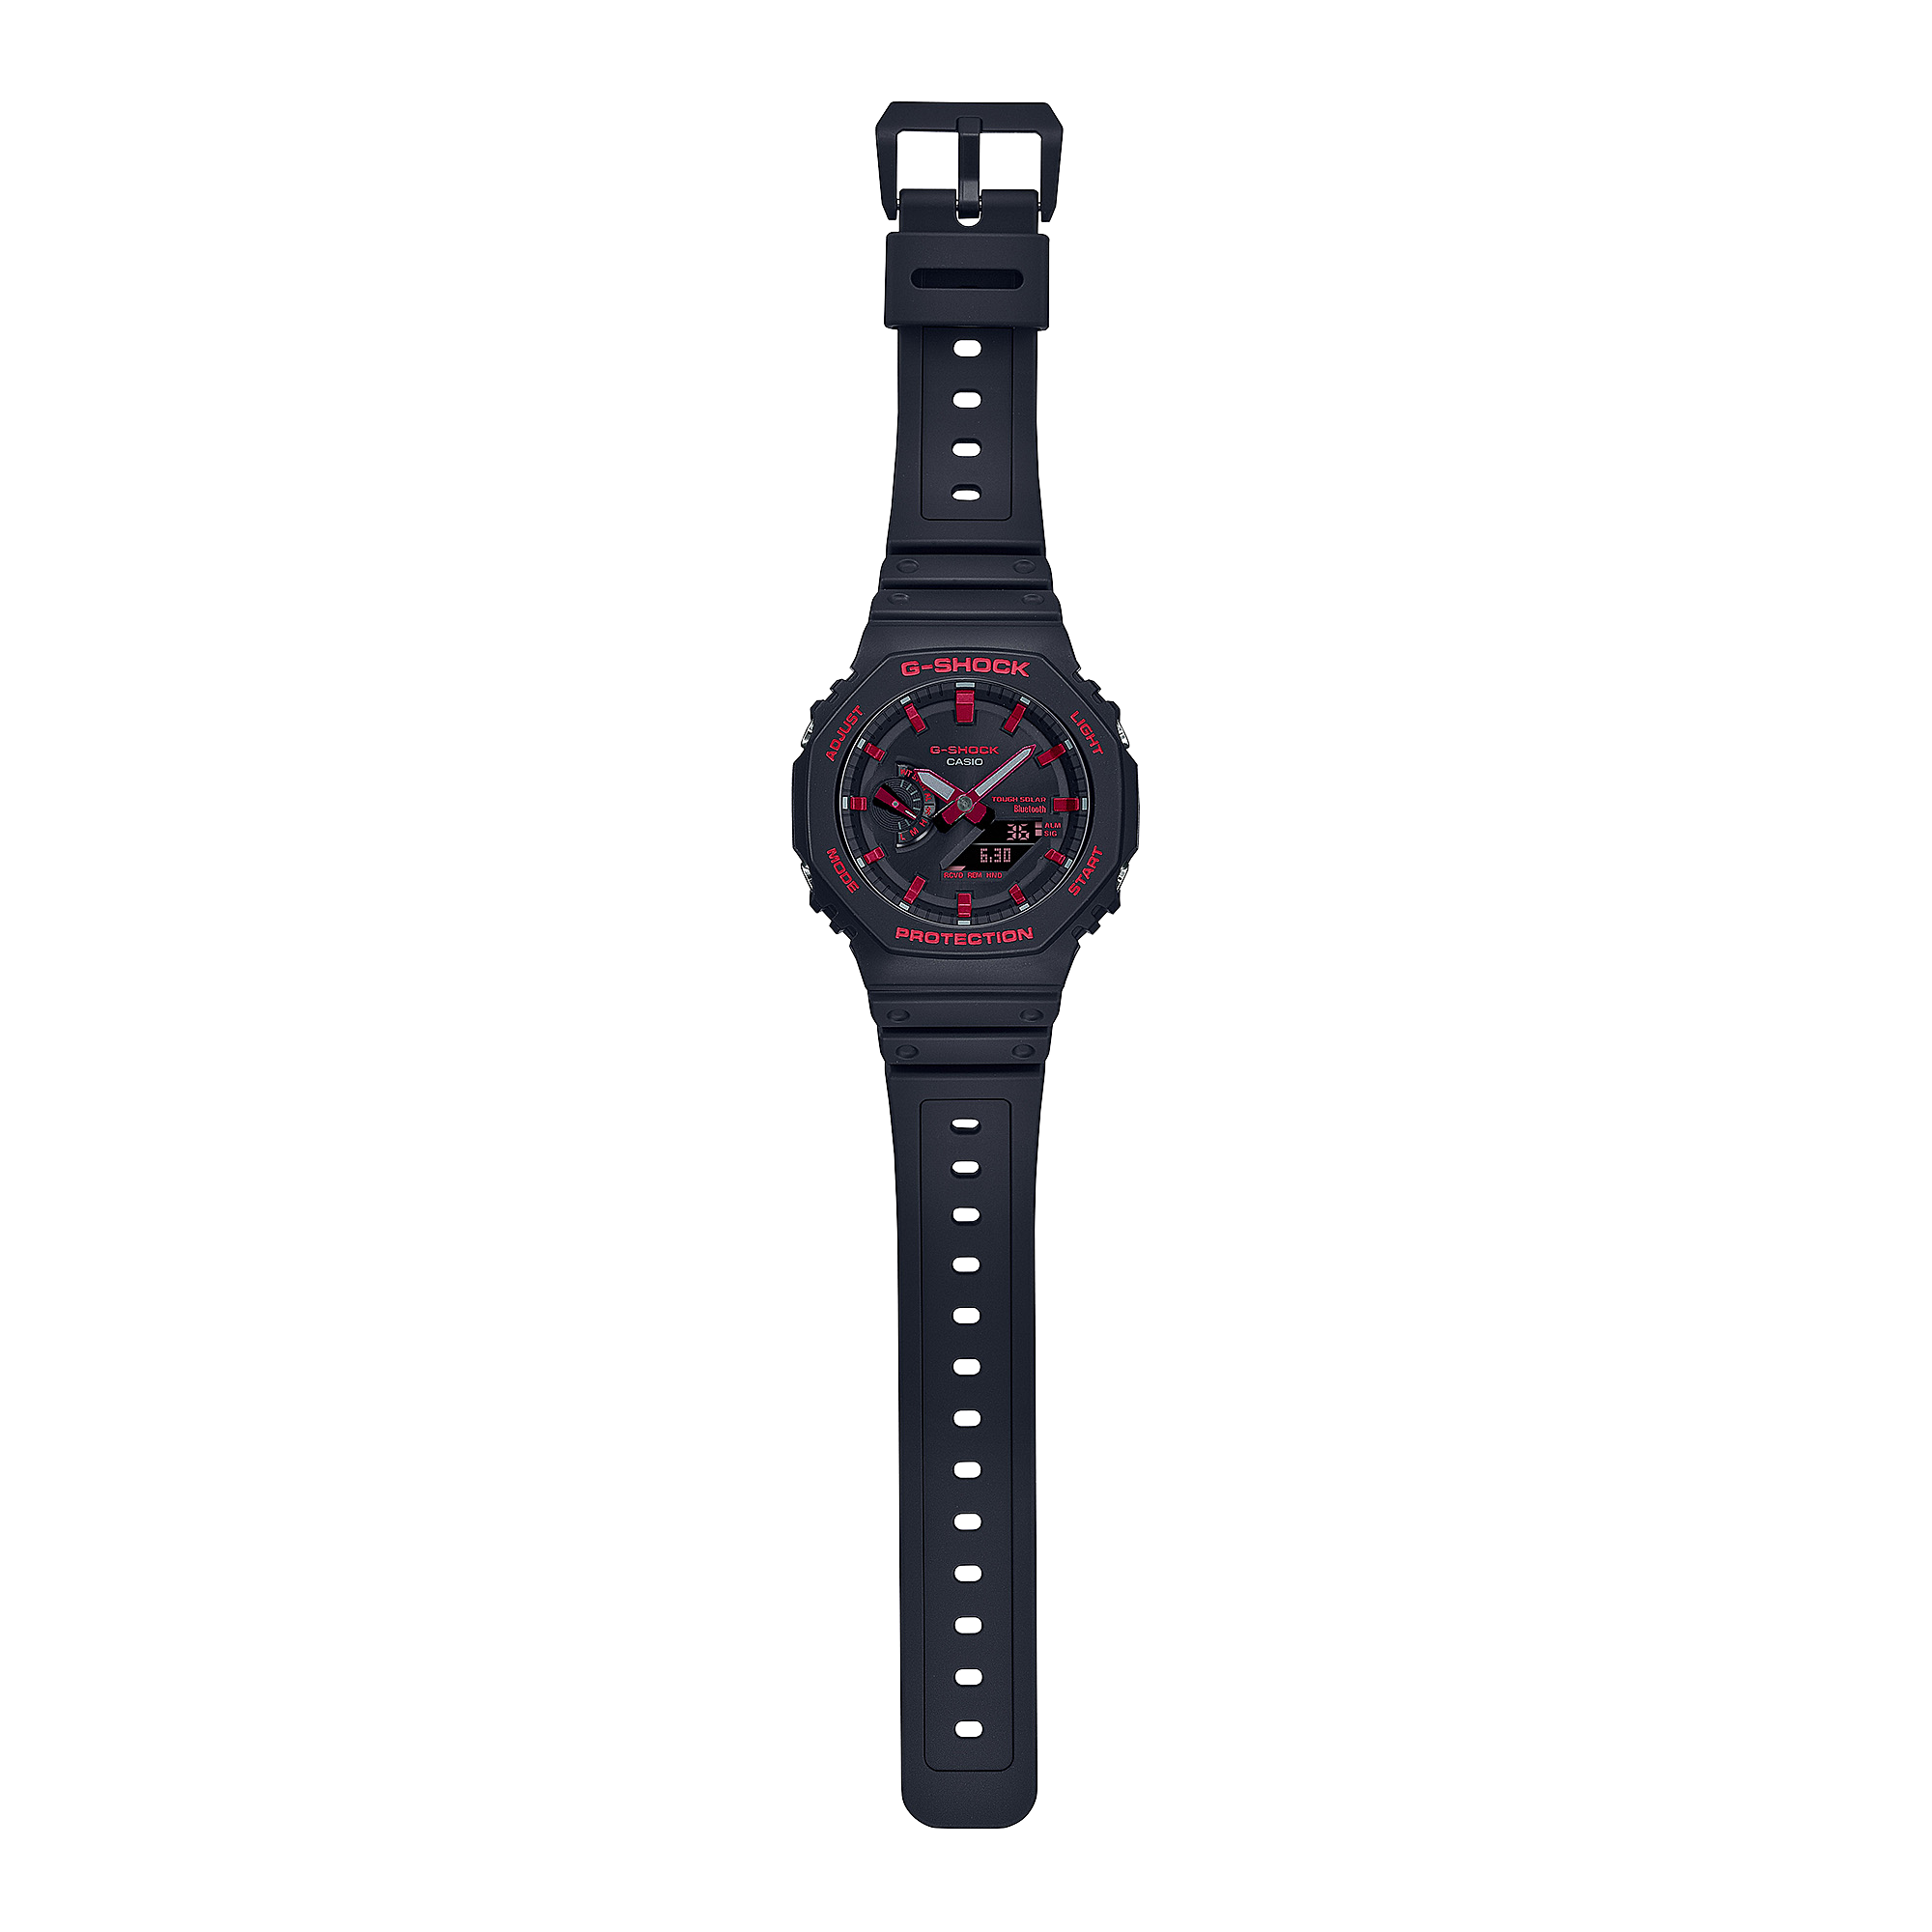 GAB-2100 Series Analog Digital Watch with Bluetooth – CoastalEdge2120